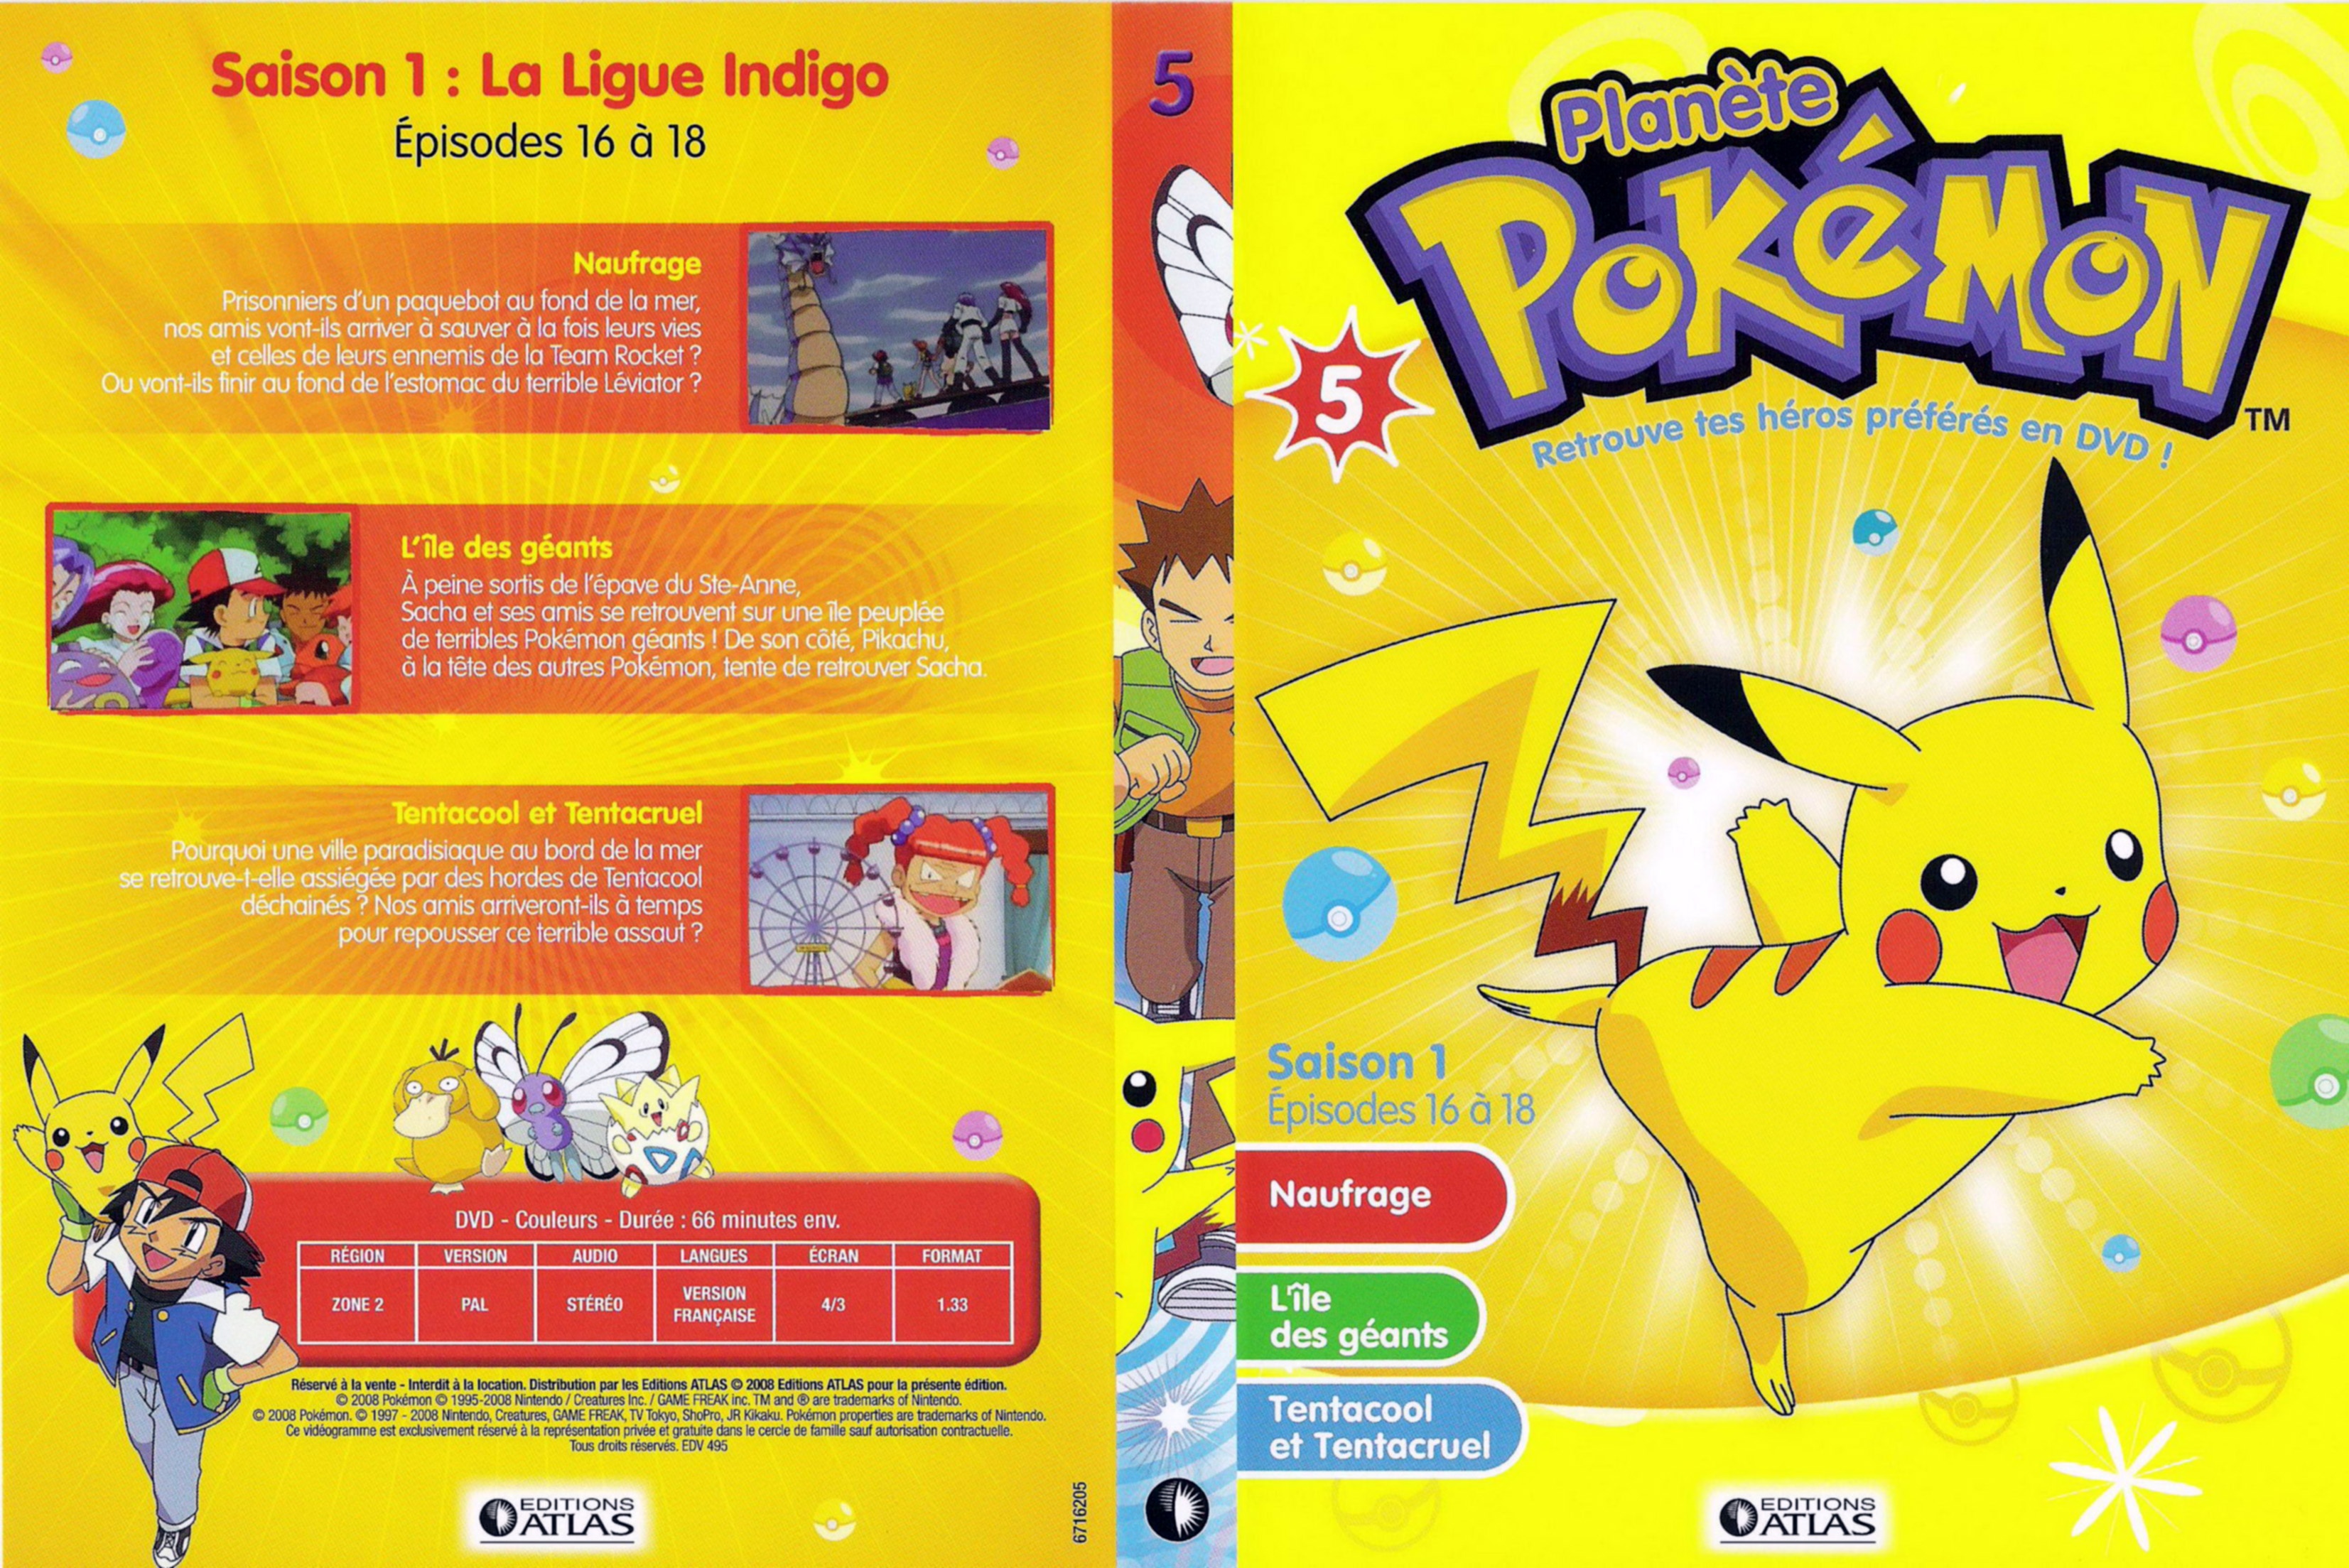 Jaquette DVD Plenete Pokemon vol 05